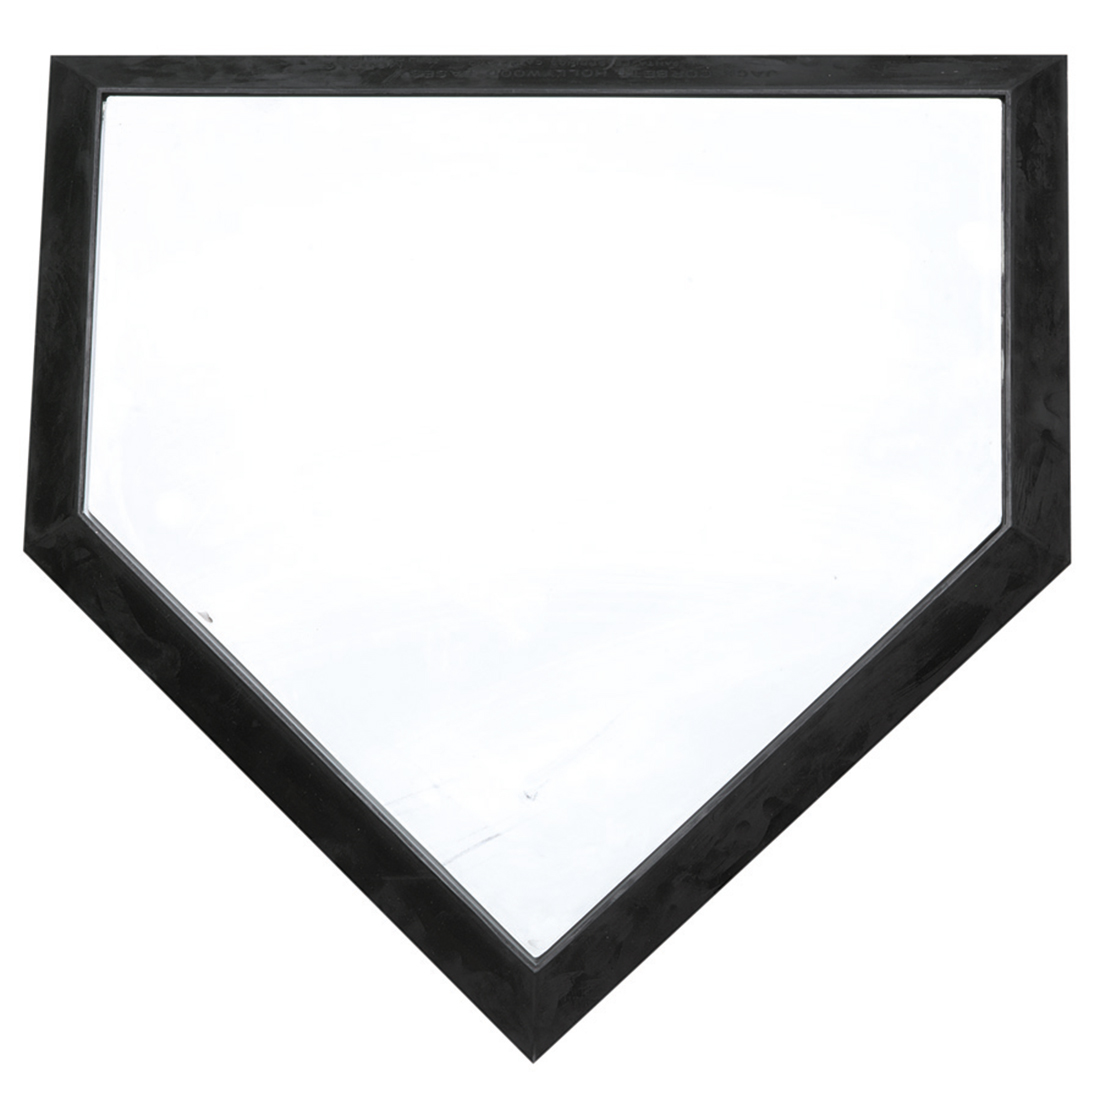 Baseball Home Plate Clipart